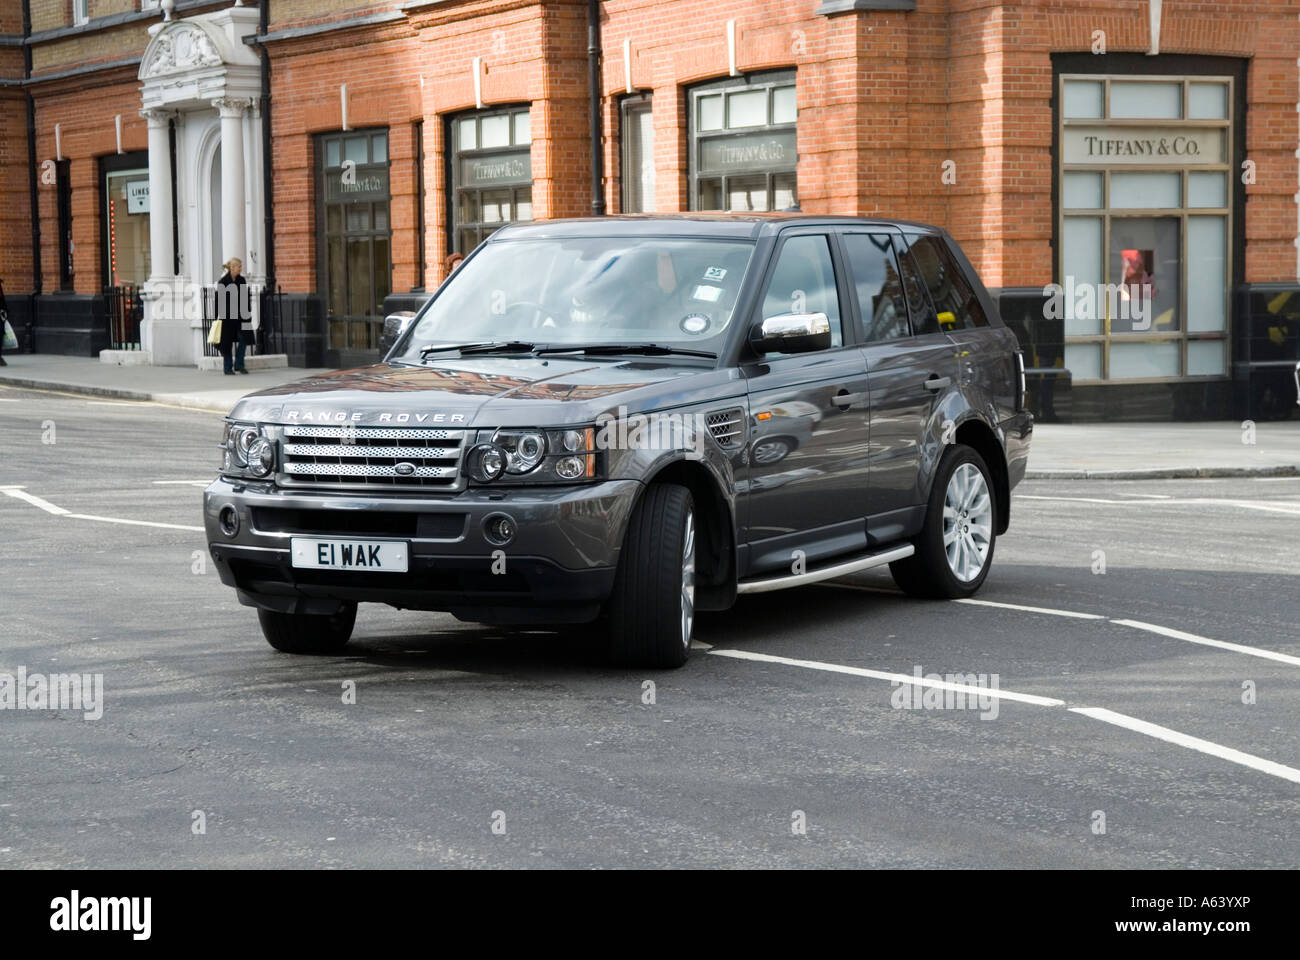 Large 4x4 Range Rover car in London England UK Stock Photo - Alamy